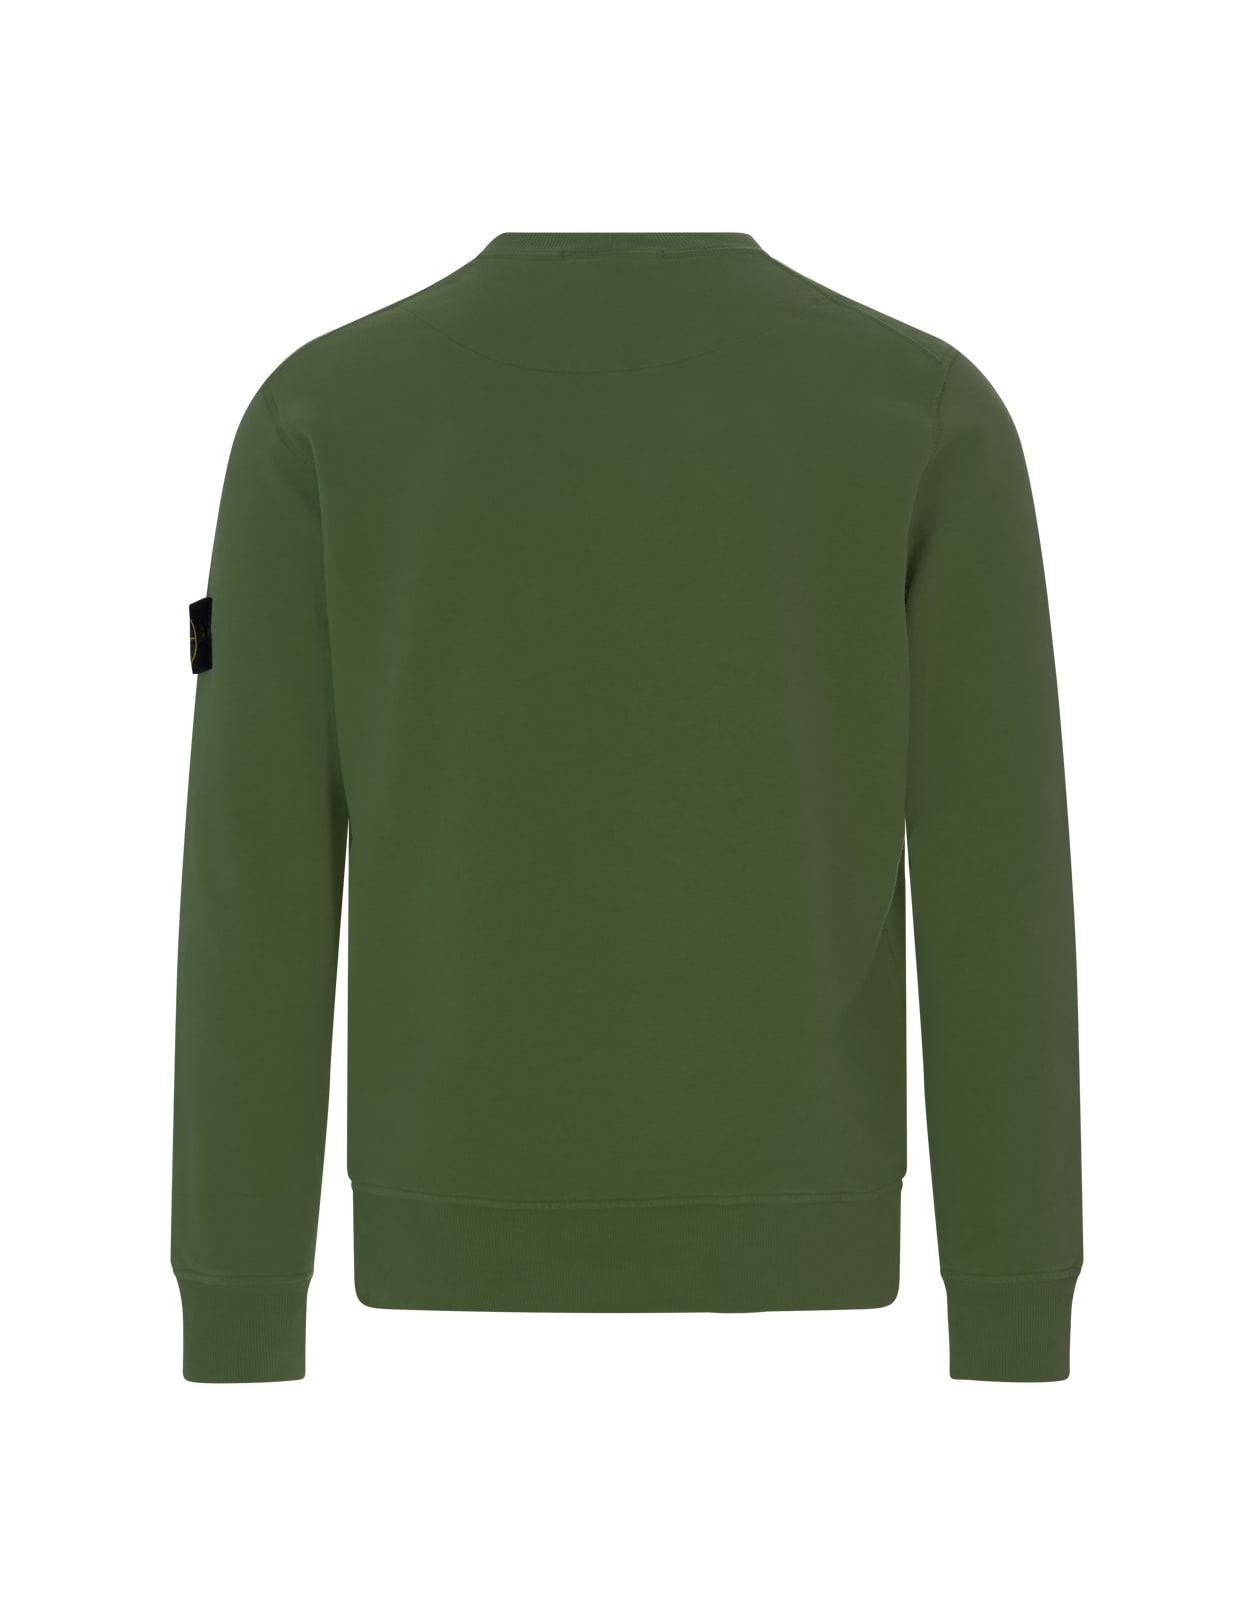 Stone Island Crew-neck Sweatshirt In Military Green Cotton for Men | Lyst